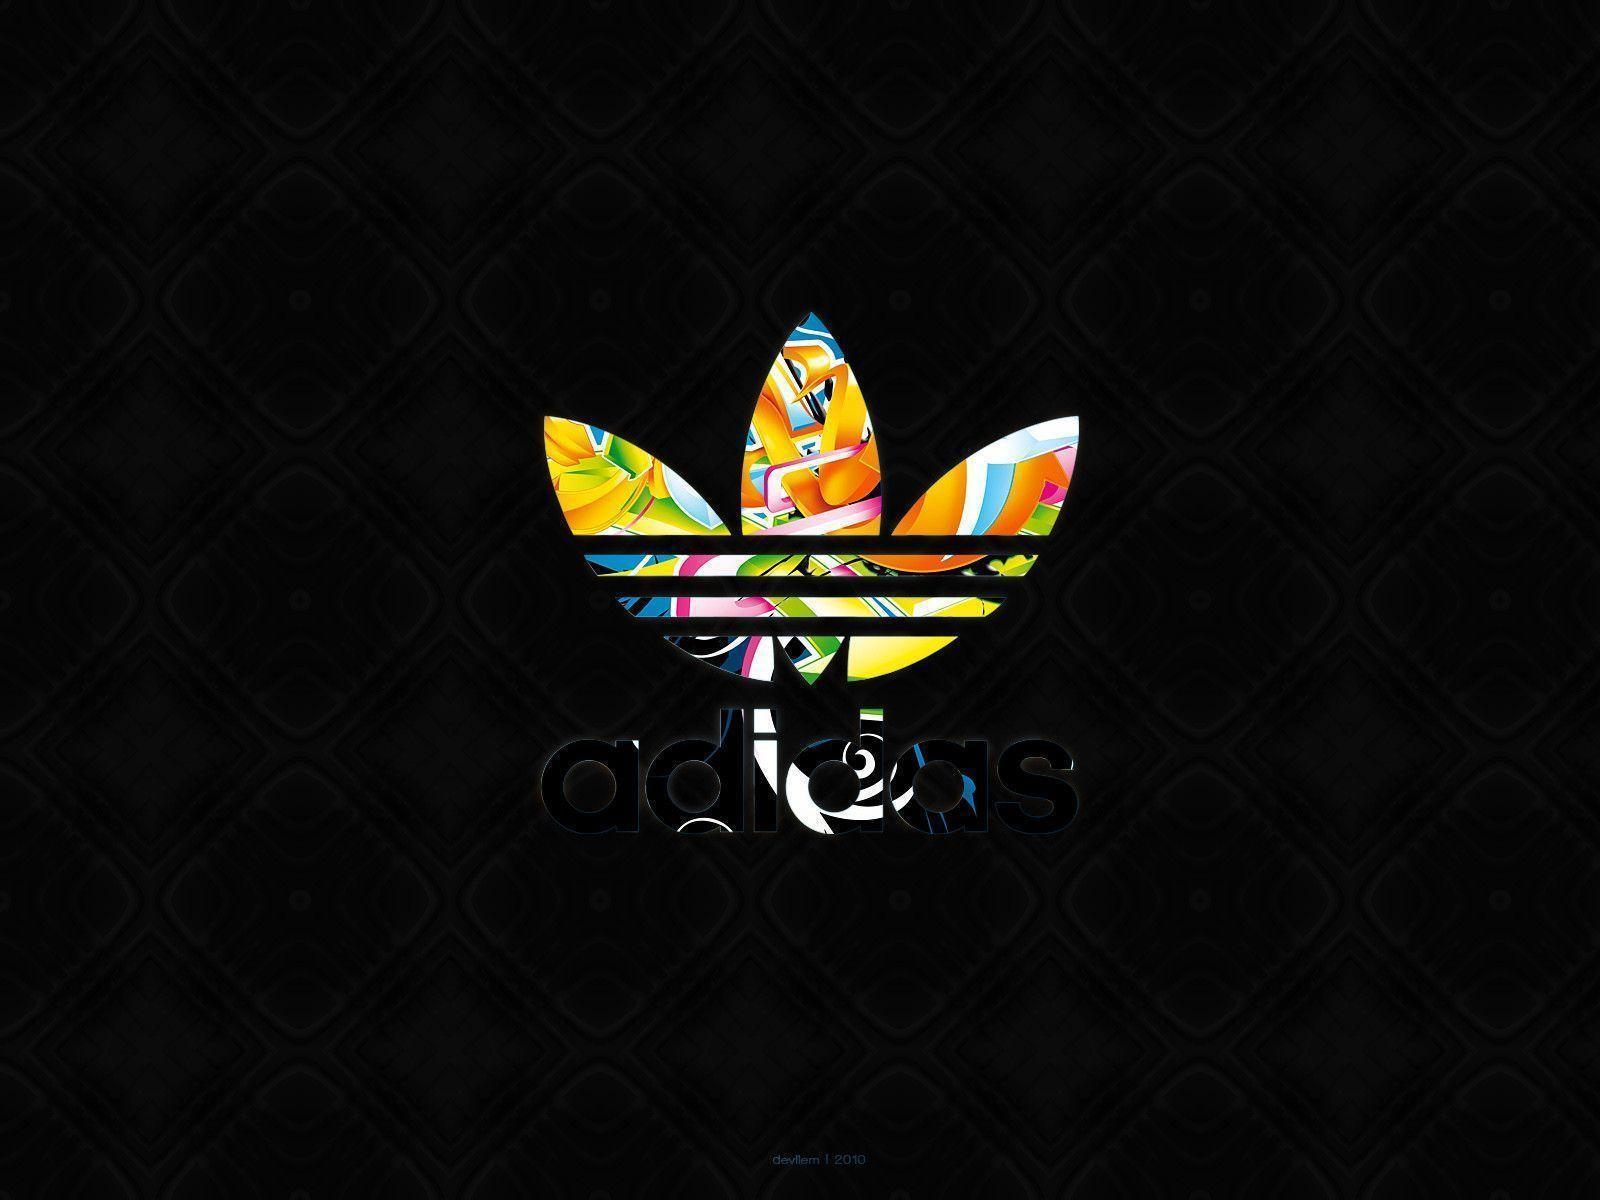 Adidas Logo Wallpapers on